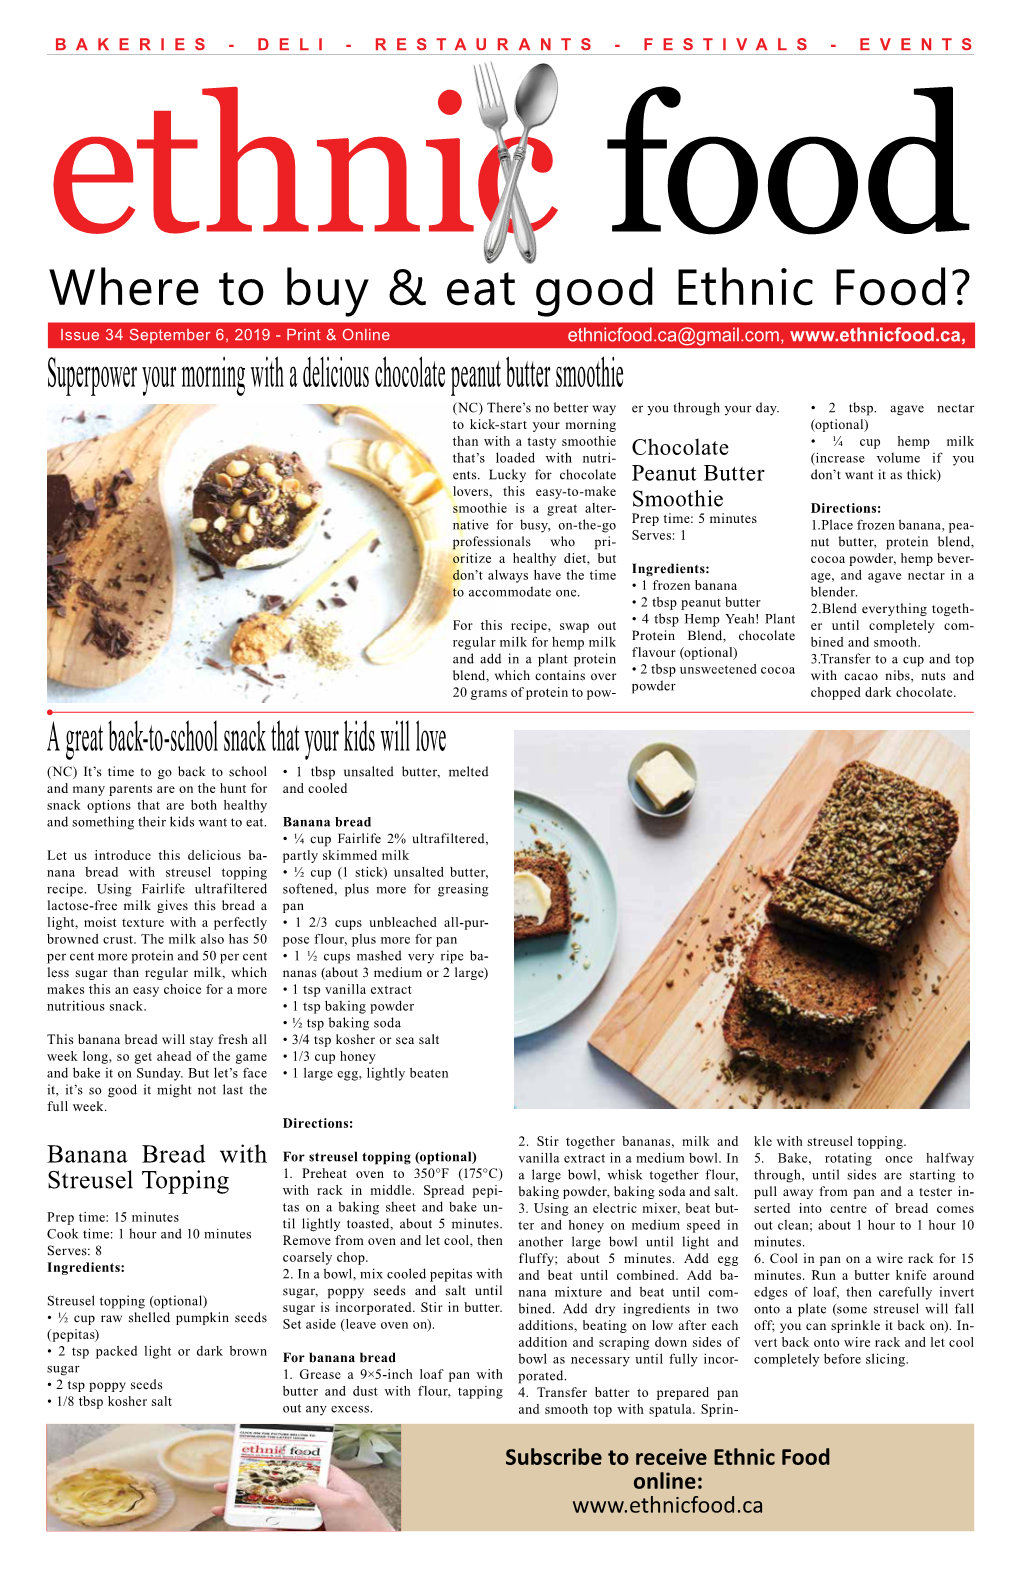 Where to Buy & Eat Good Ethnic Food?